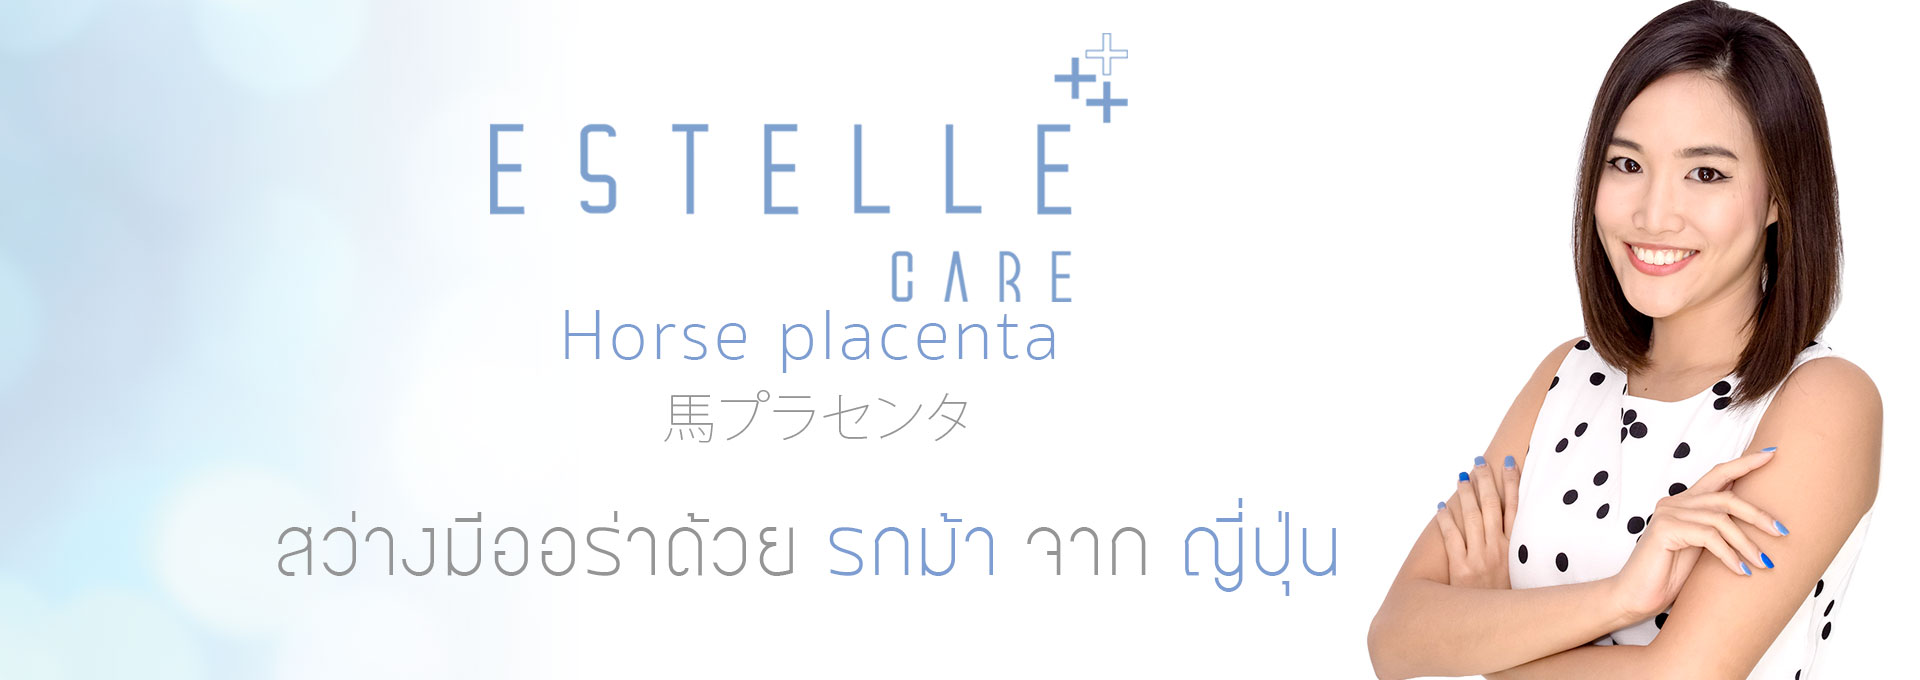 Estelle Care Horse Placenta Cream 50g ครีมบำรุงผิวหน้าด้วยรกม้าบริสุทธิ์จากญี่ปุ่น